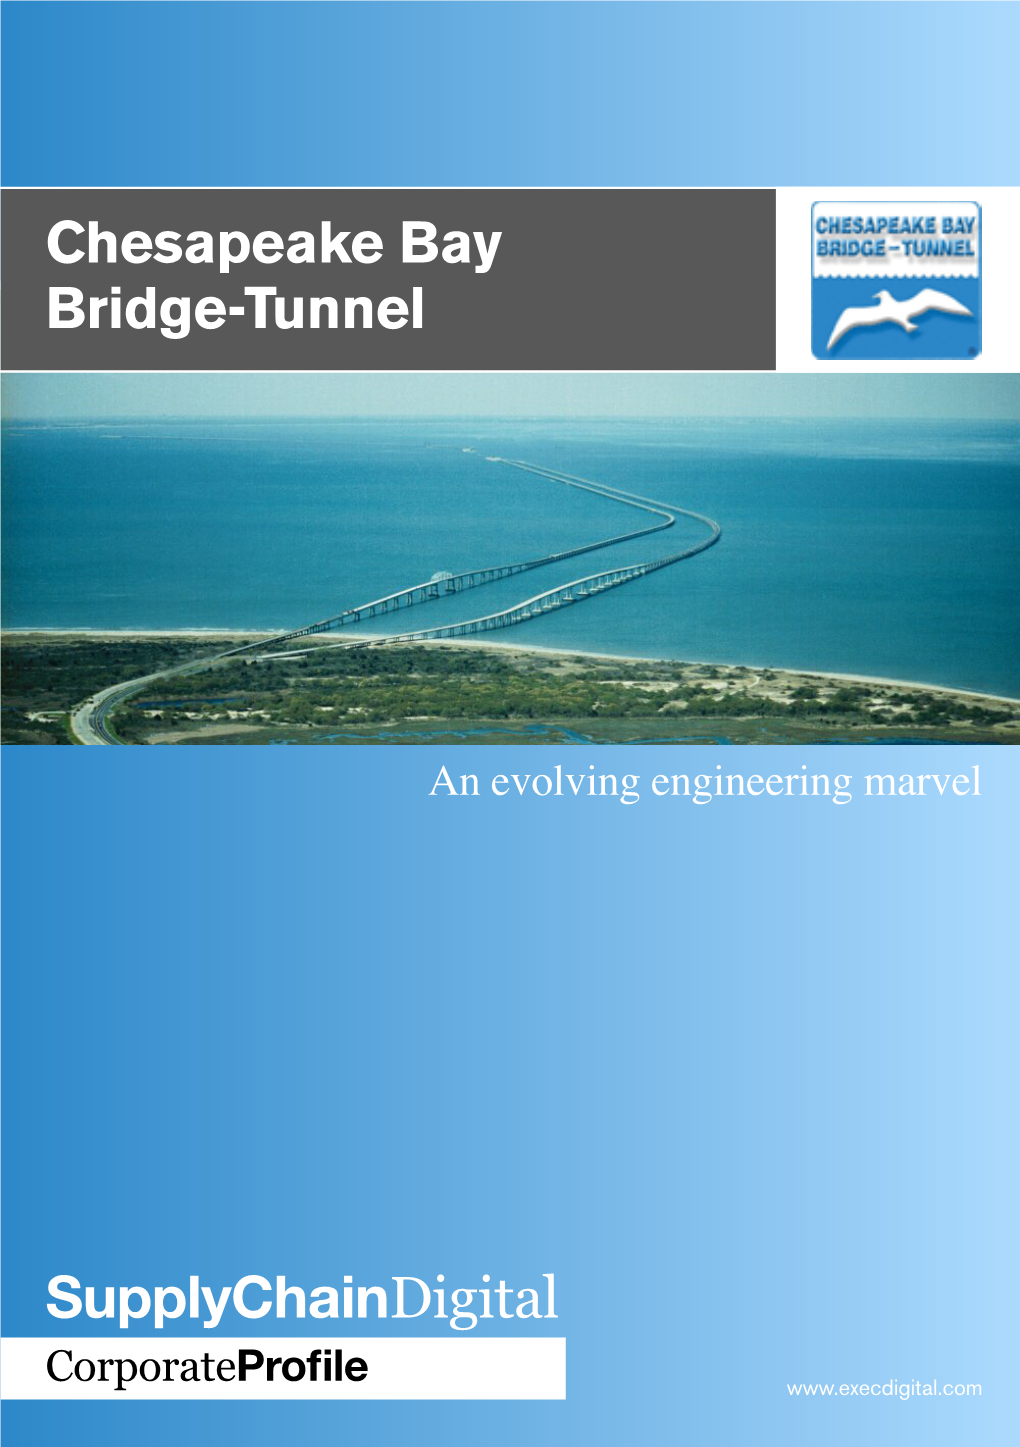 Chesapeake Bay Bridge-Tunnel Supplychaindigital